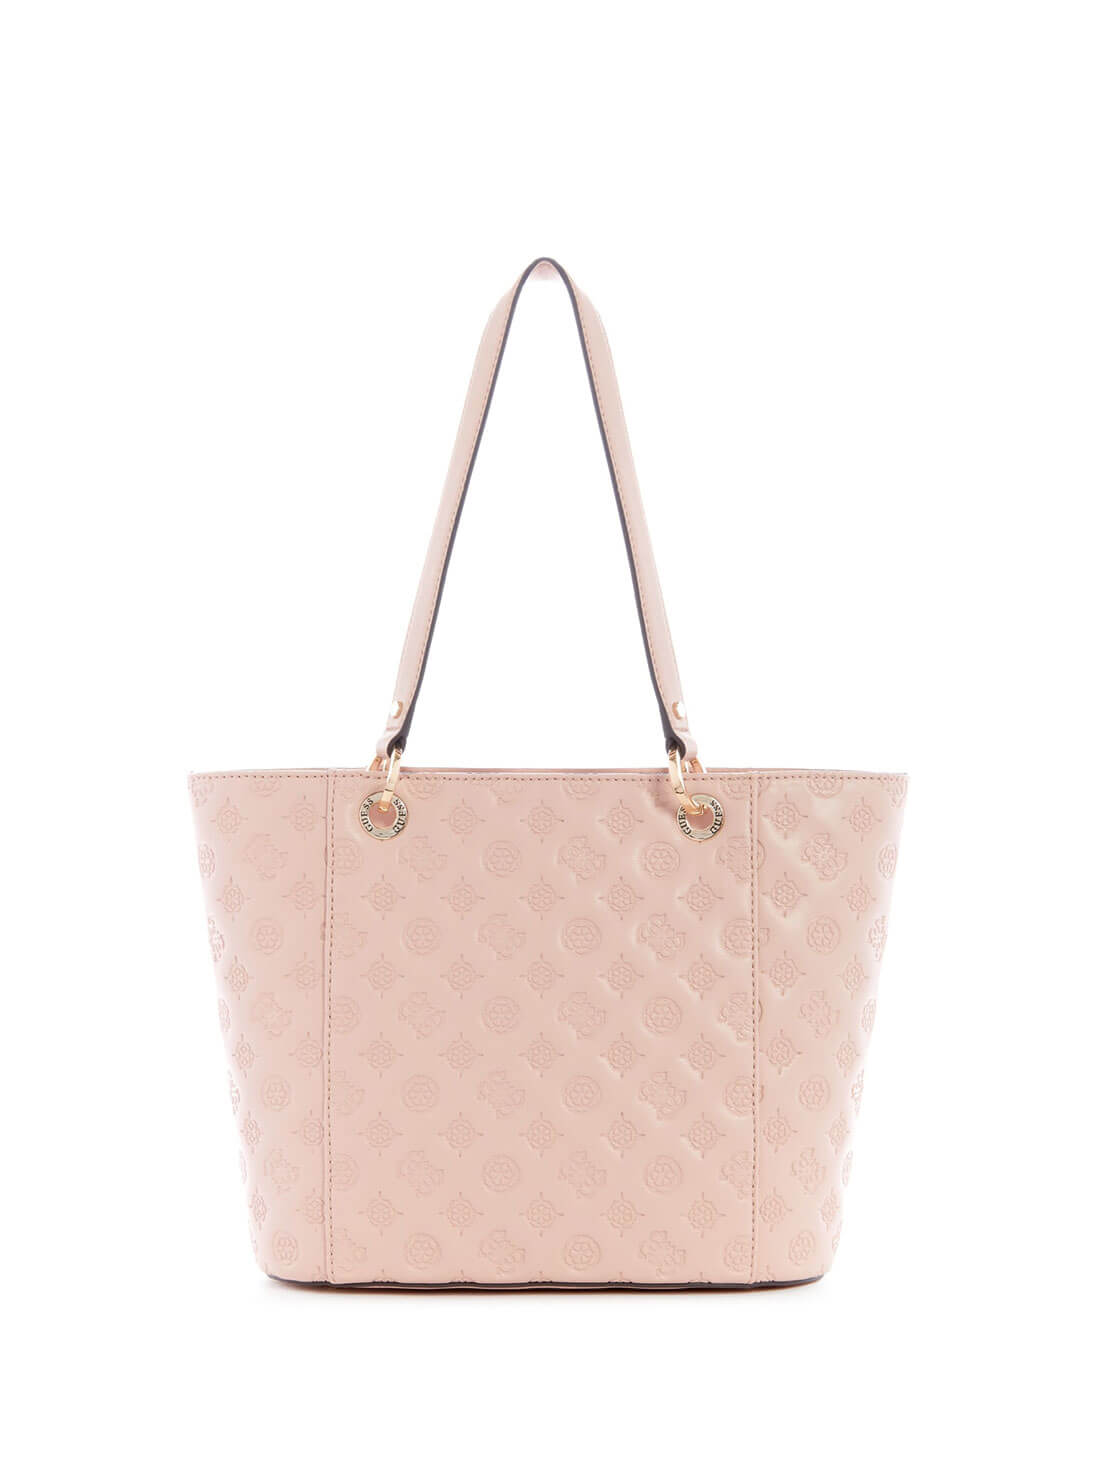 Light Pink Noelle La Femme Small Tote Bag | GUESS Women's Handbags | back view